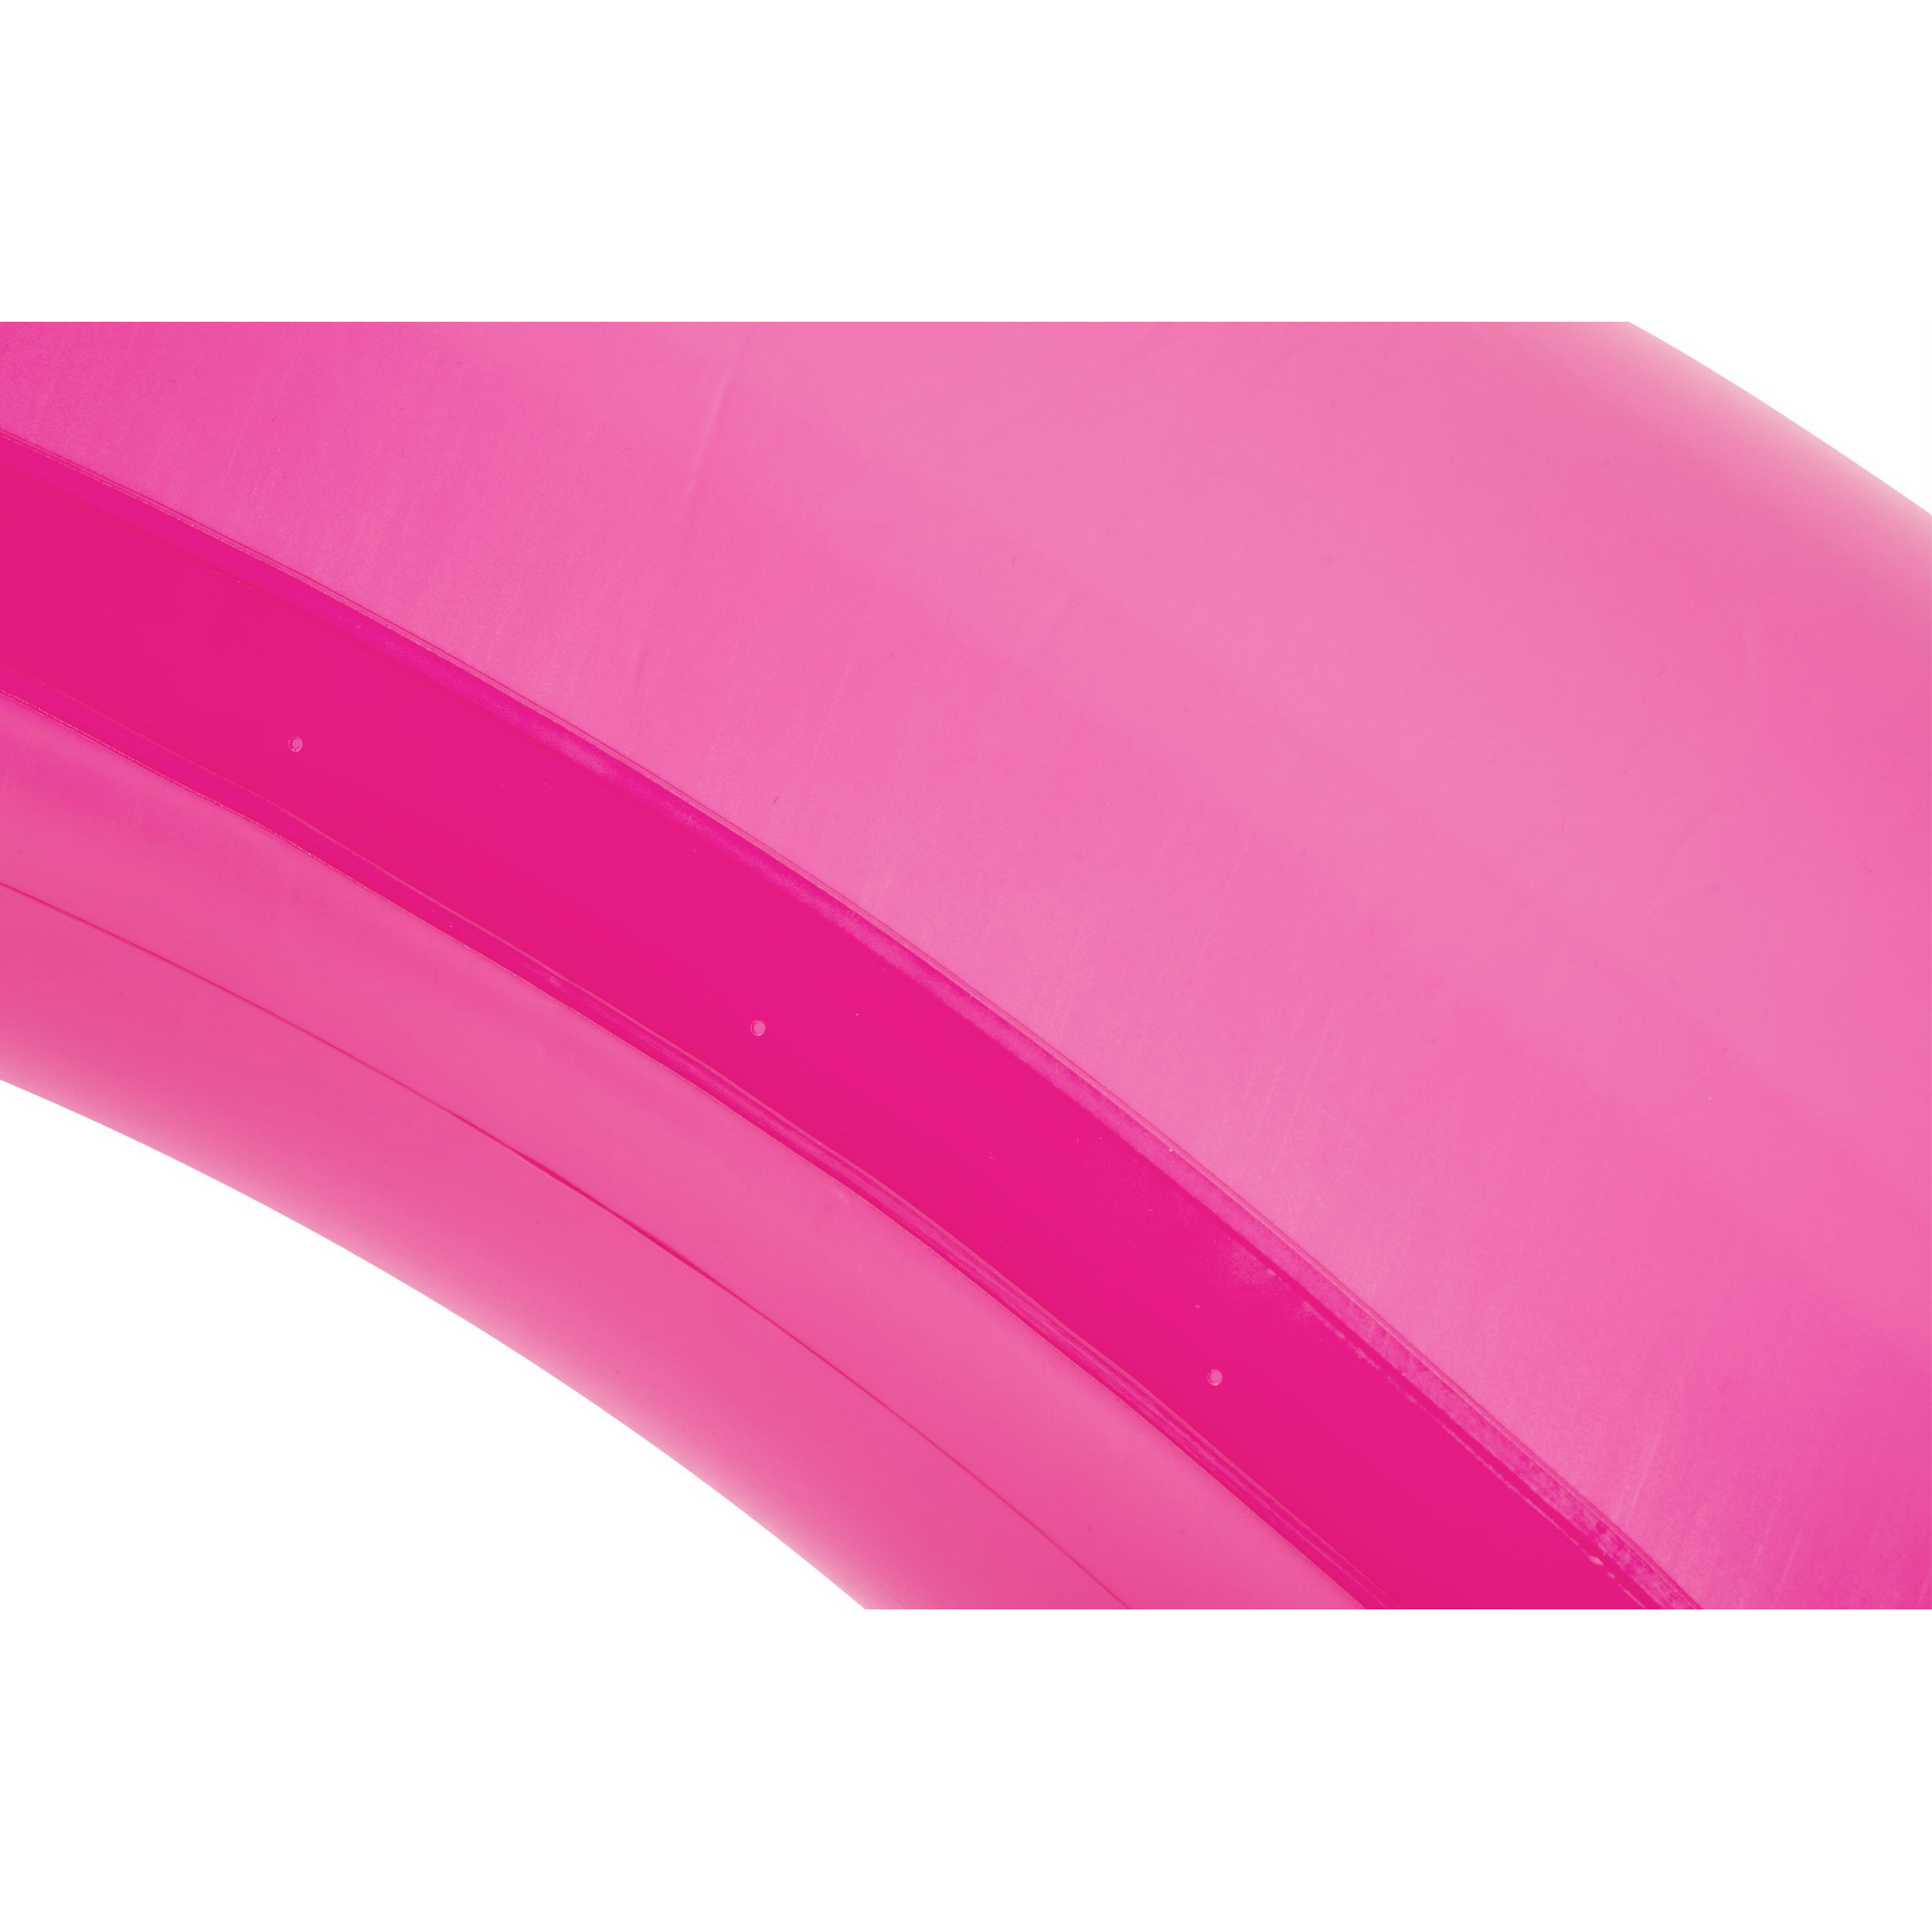 Jumbo Wassersprinkler 'Flamingo' pink 340 x 110 x 192 cm + product picture